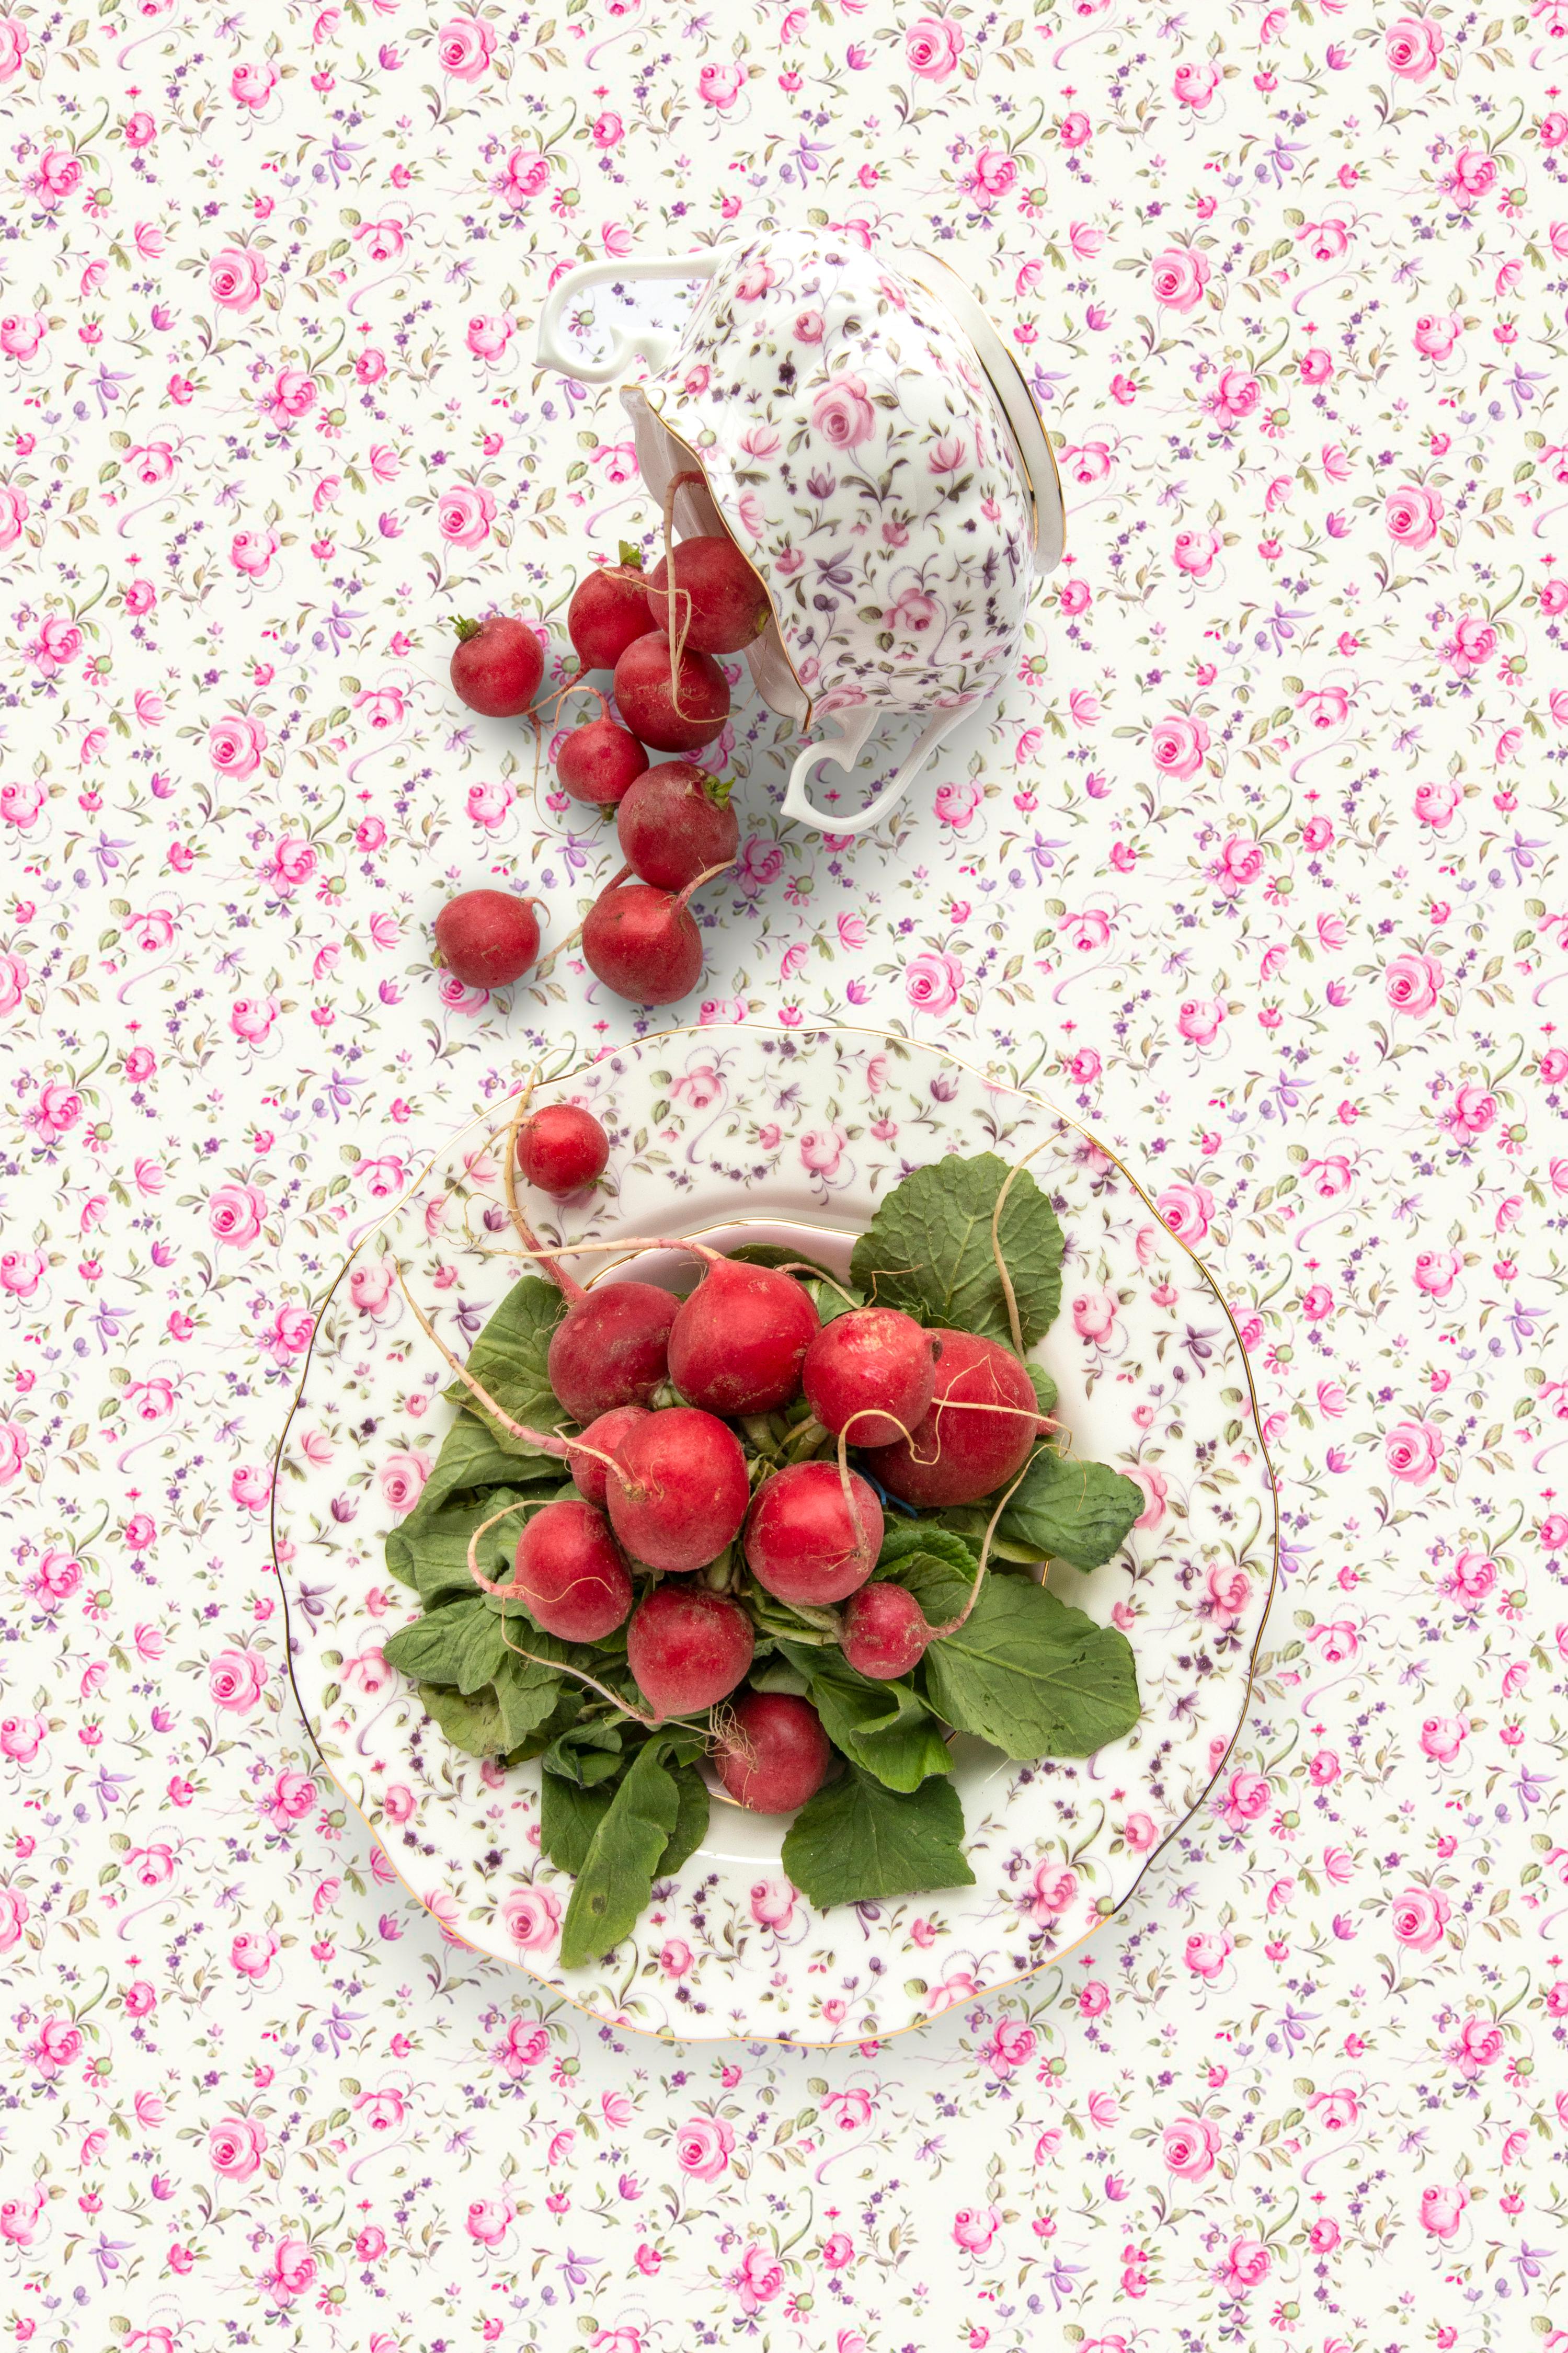 JP Terlizzi Still-Life Photograph - Royal Albert Rose Confetti with Radish - Pink & white floral food still life